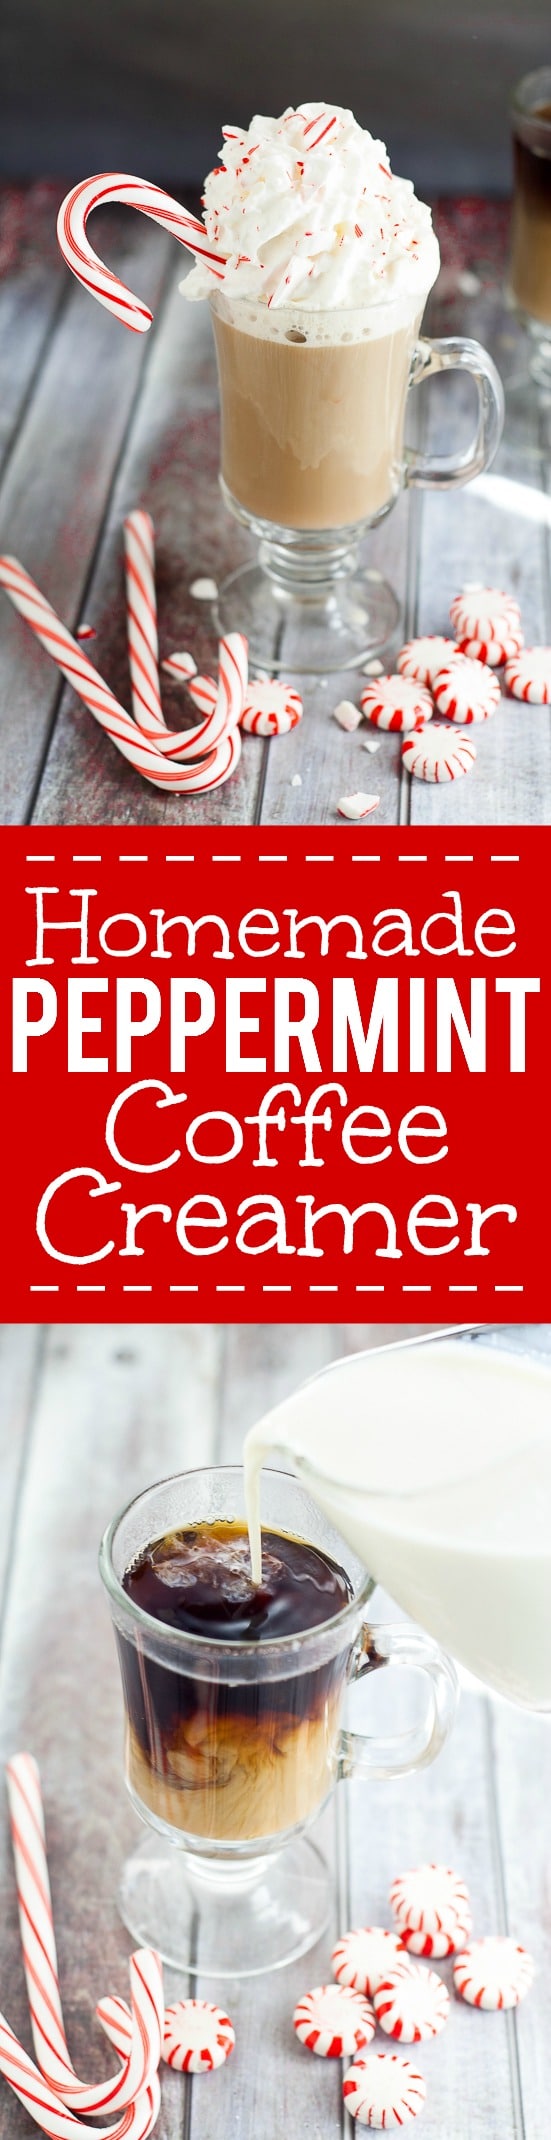 Homemade Peppermint Coffee Creamer Recipe | The Gracious Wife